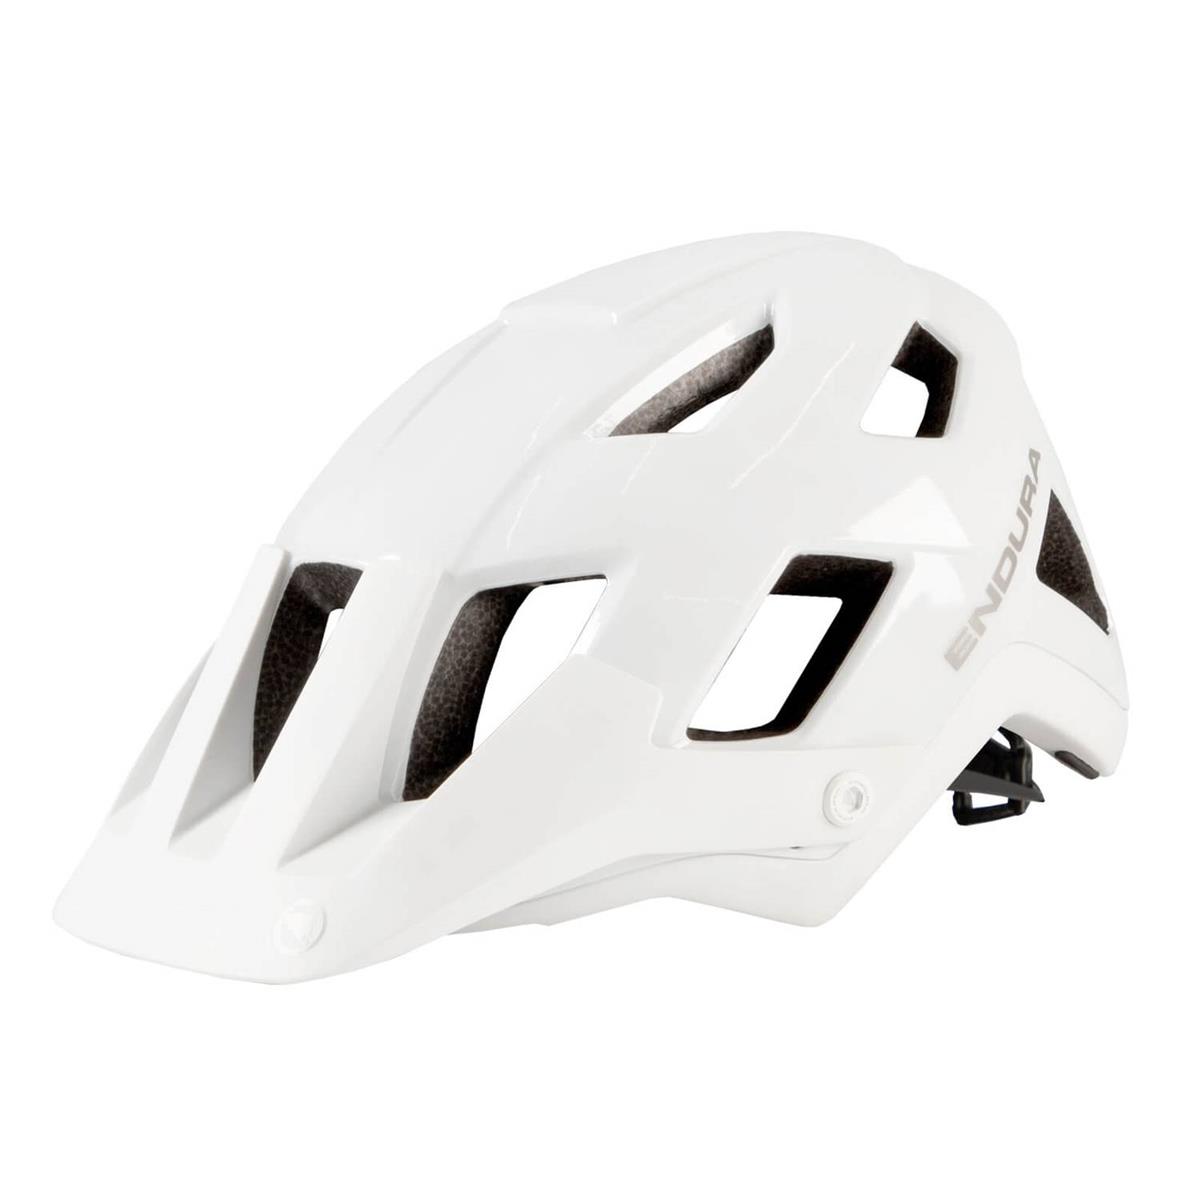 Hummvee Plus MTB Enduro Helmet White Size S/M (51-56cm)